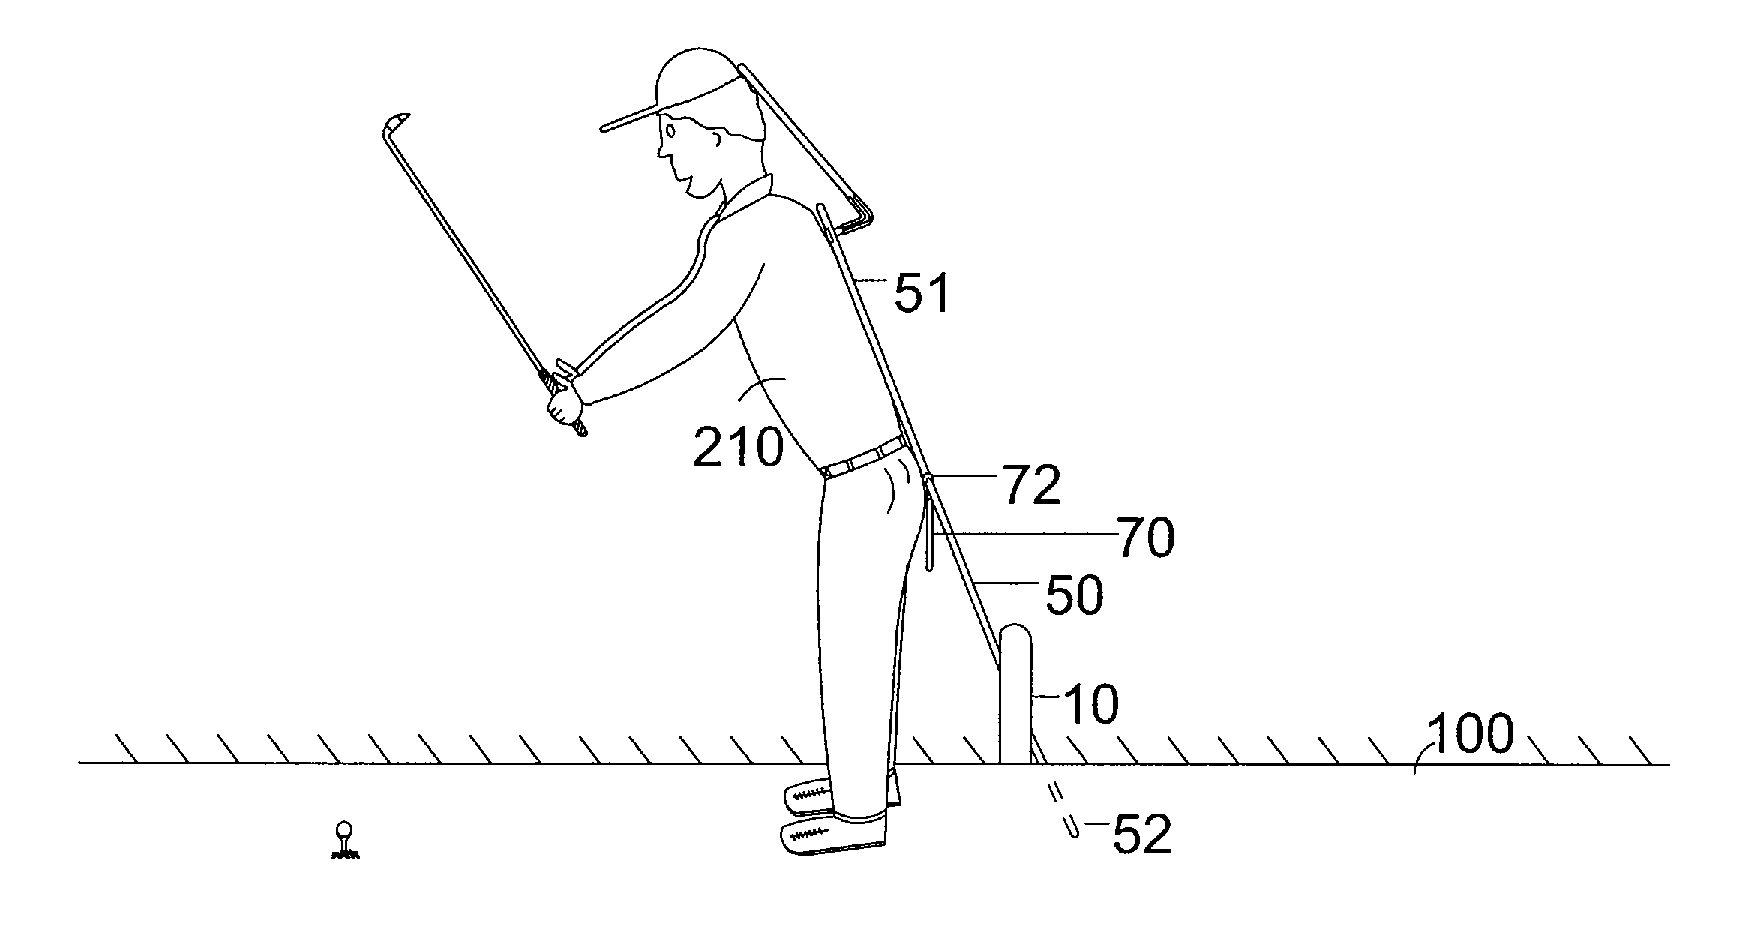 Golf training method and apparatus